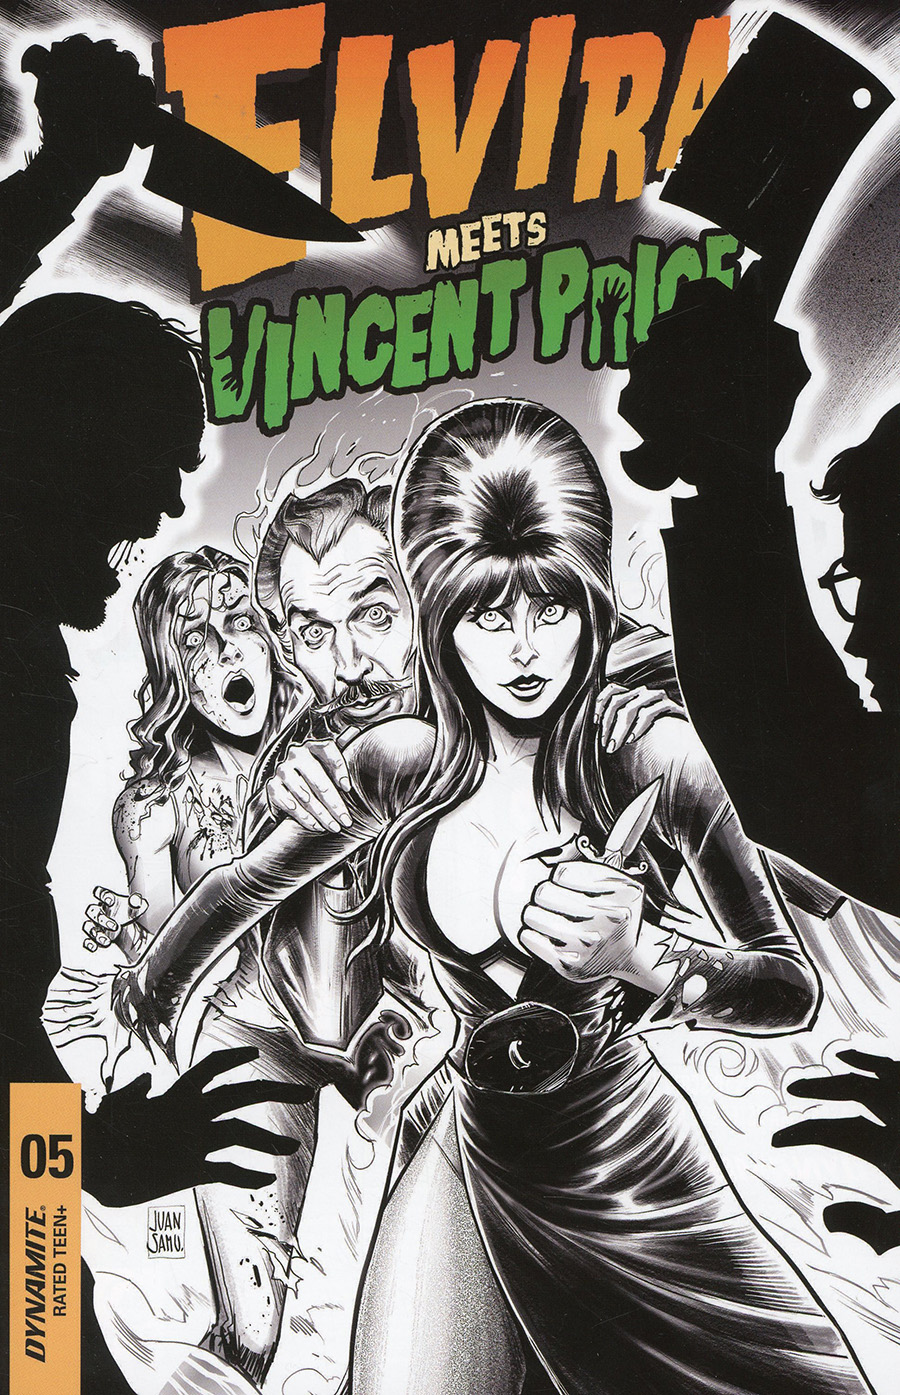 Elvira Meets Vincent Price #5 Cover F Incentive Juan Samu Black & White Line Art Cover